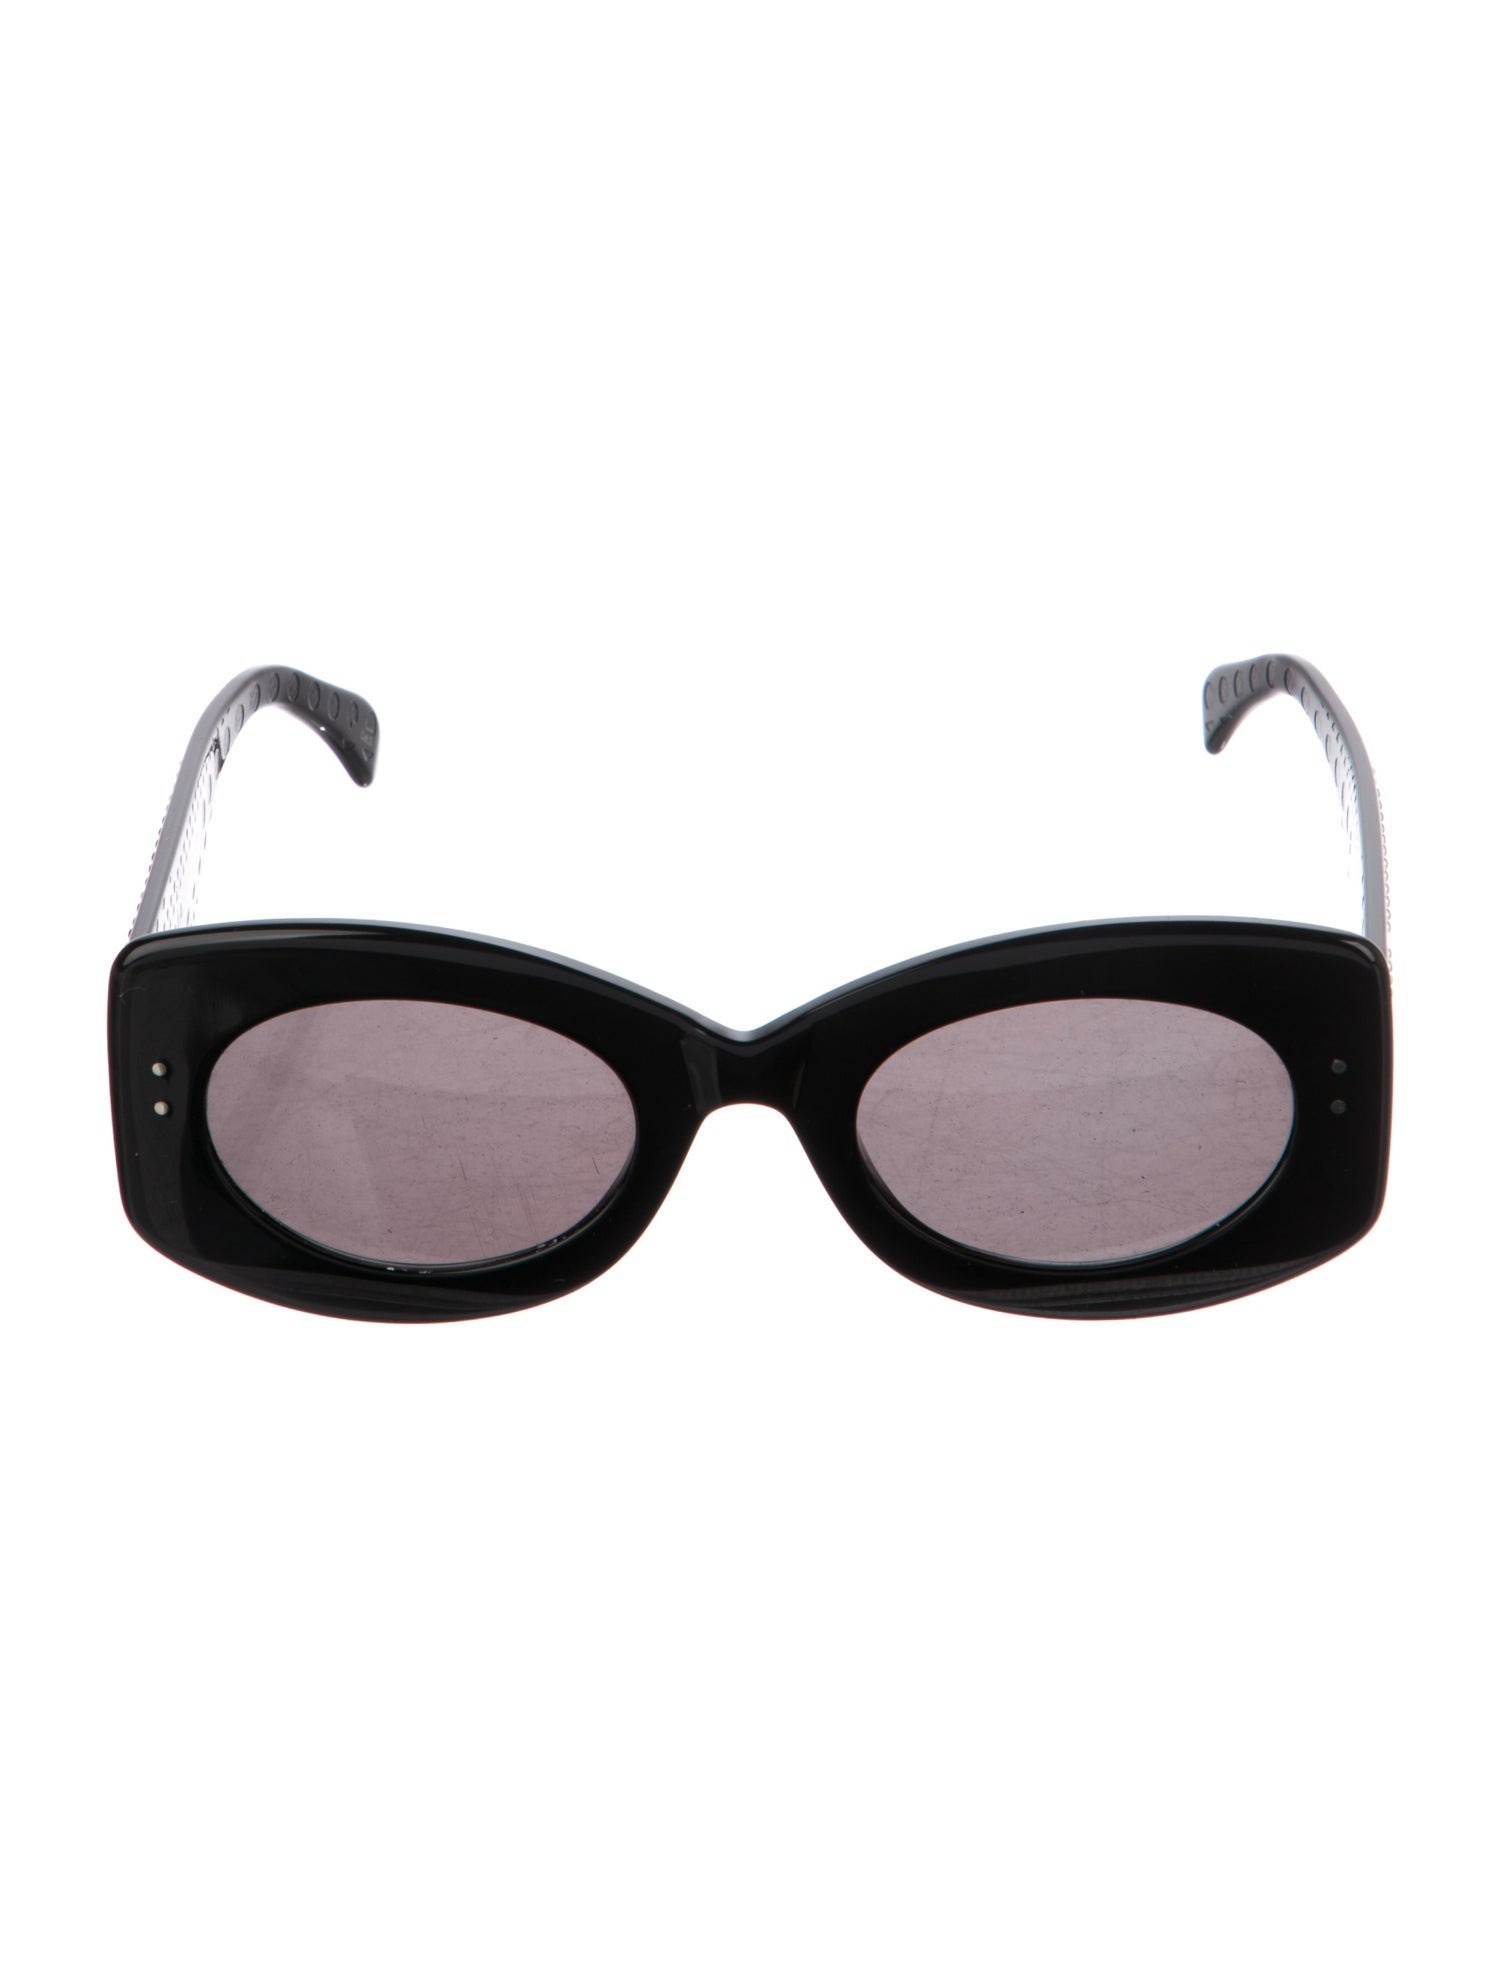 ALAÏA , Oversize Tinted Sunglasses $195.00